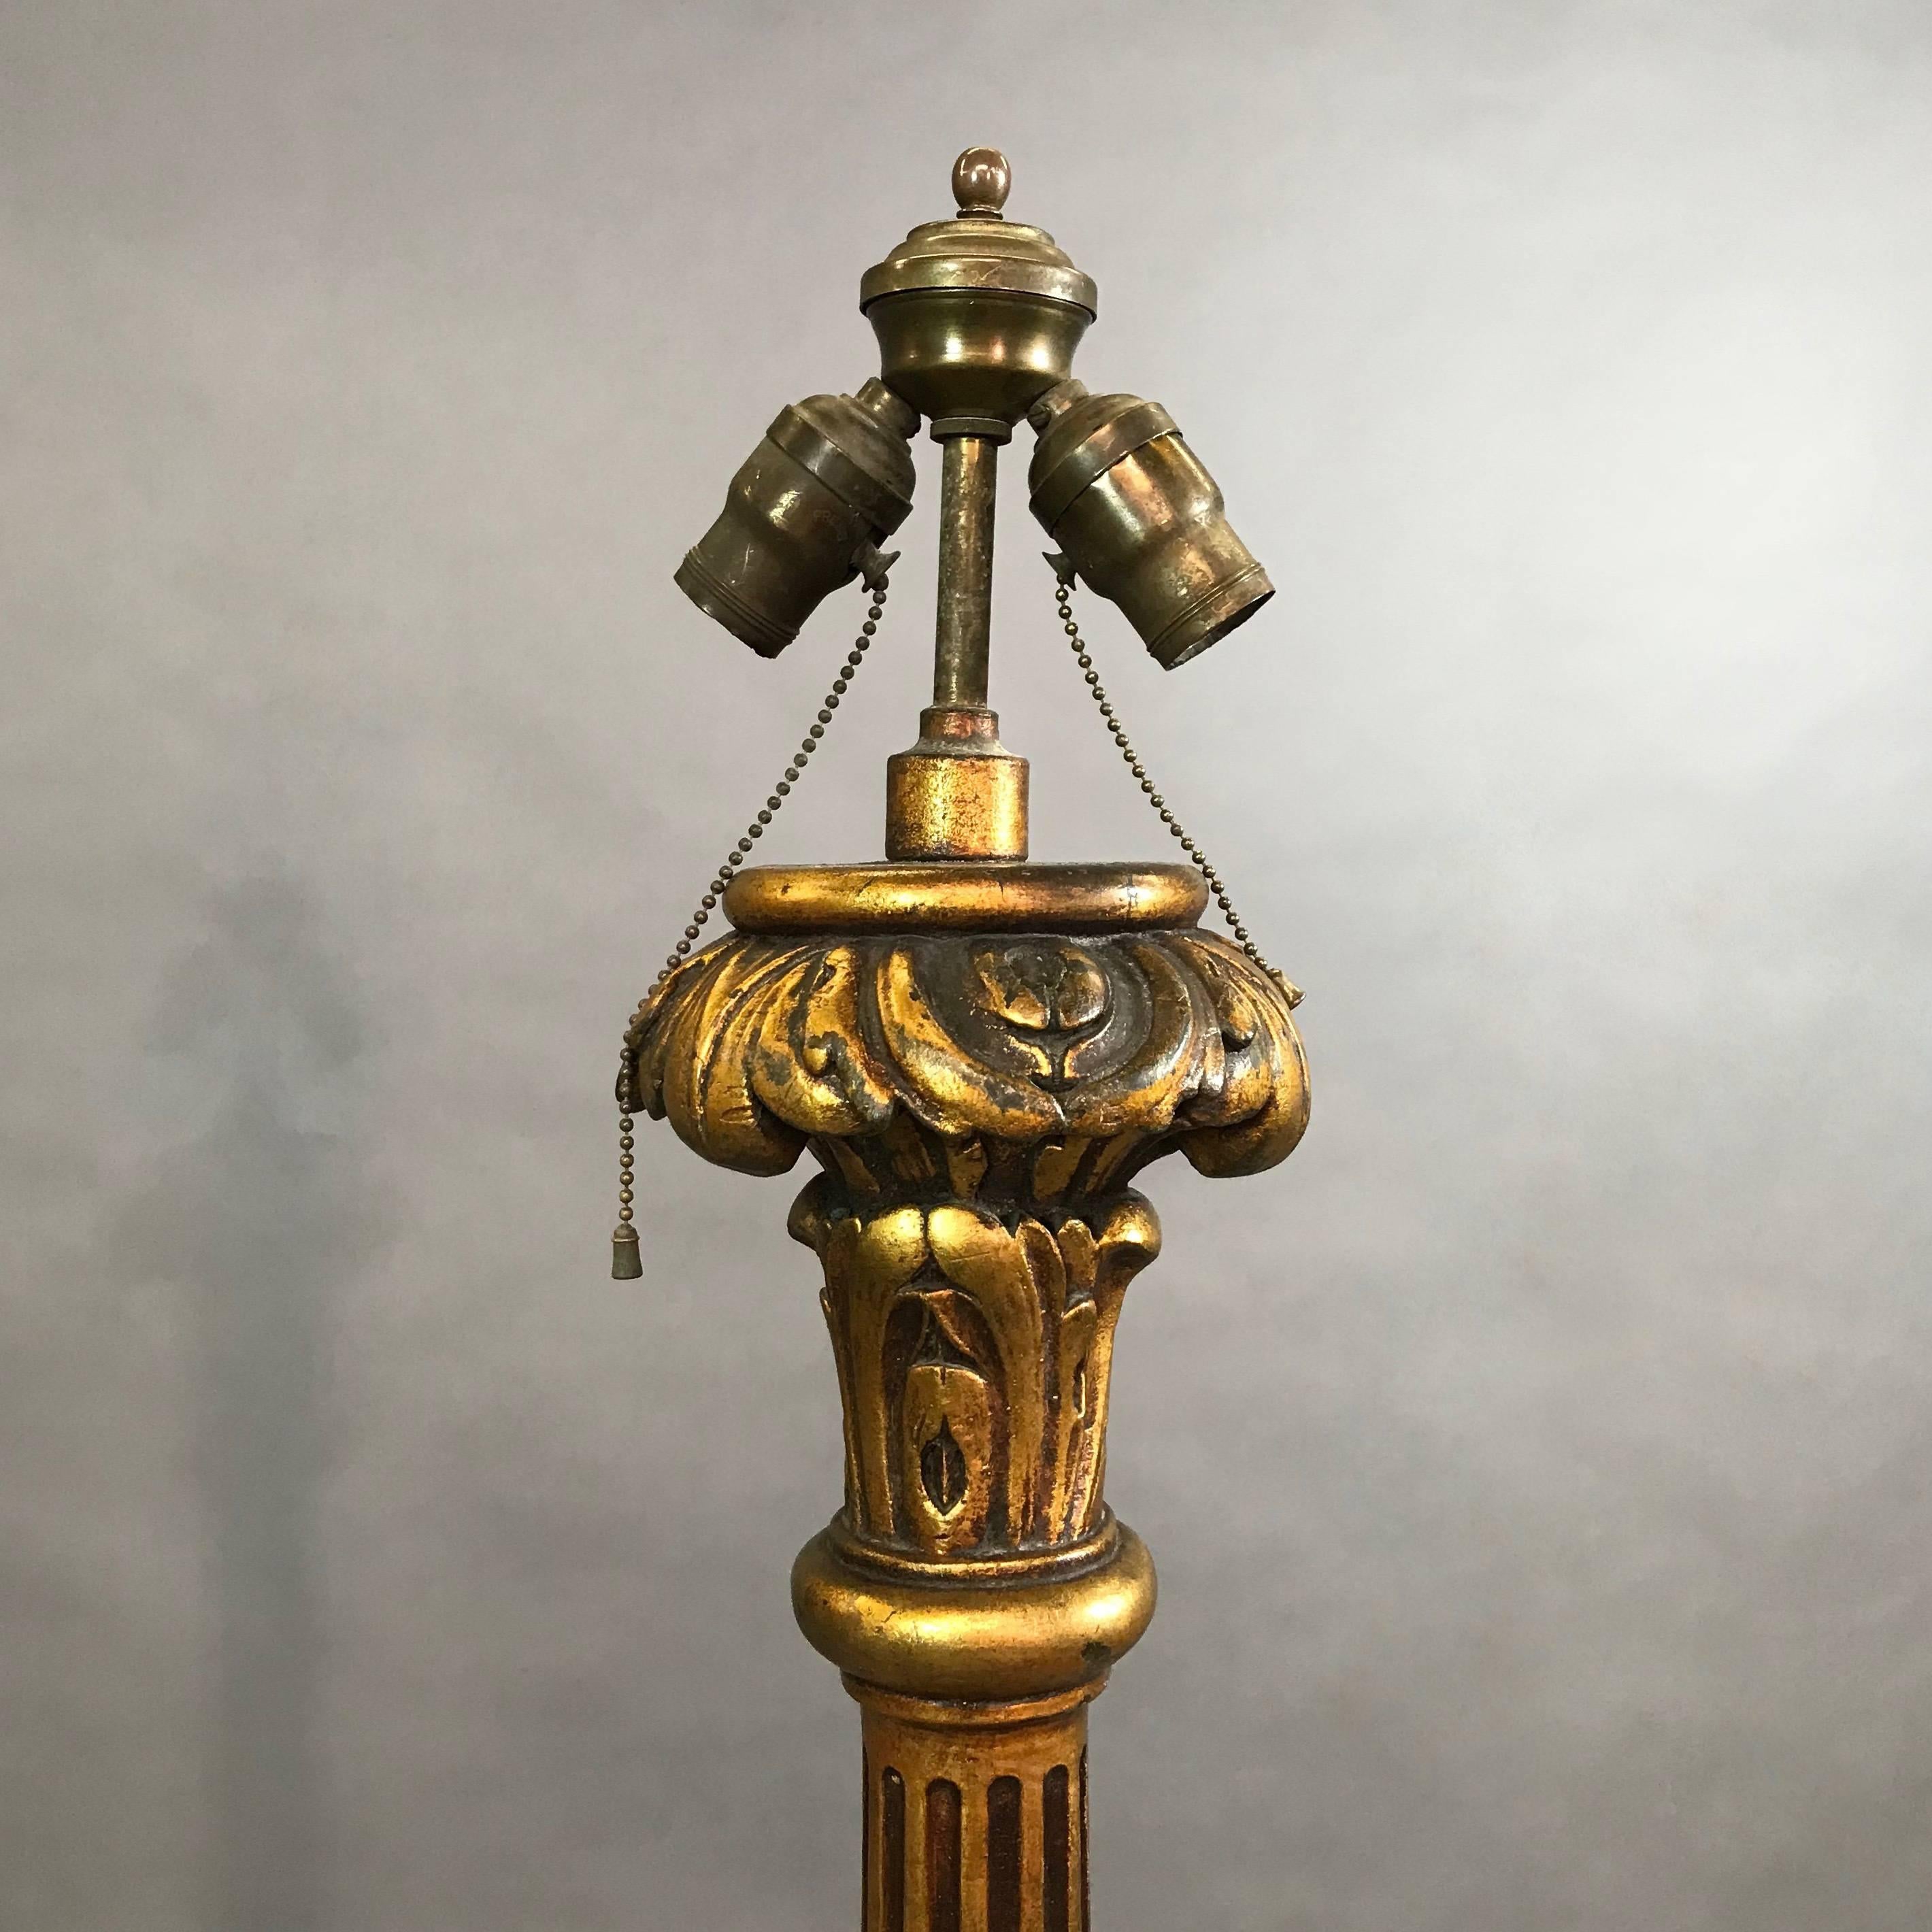 Baroque Tall Ornate Carved Gilt Composite Floor Lamp